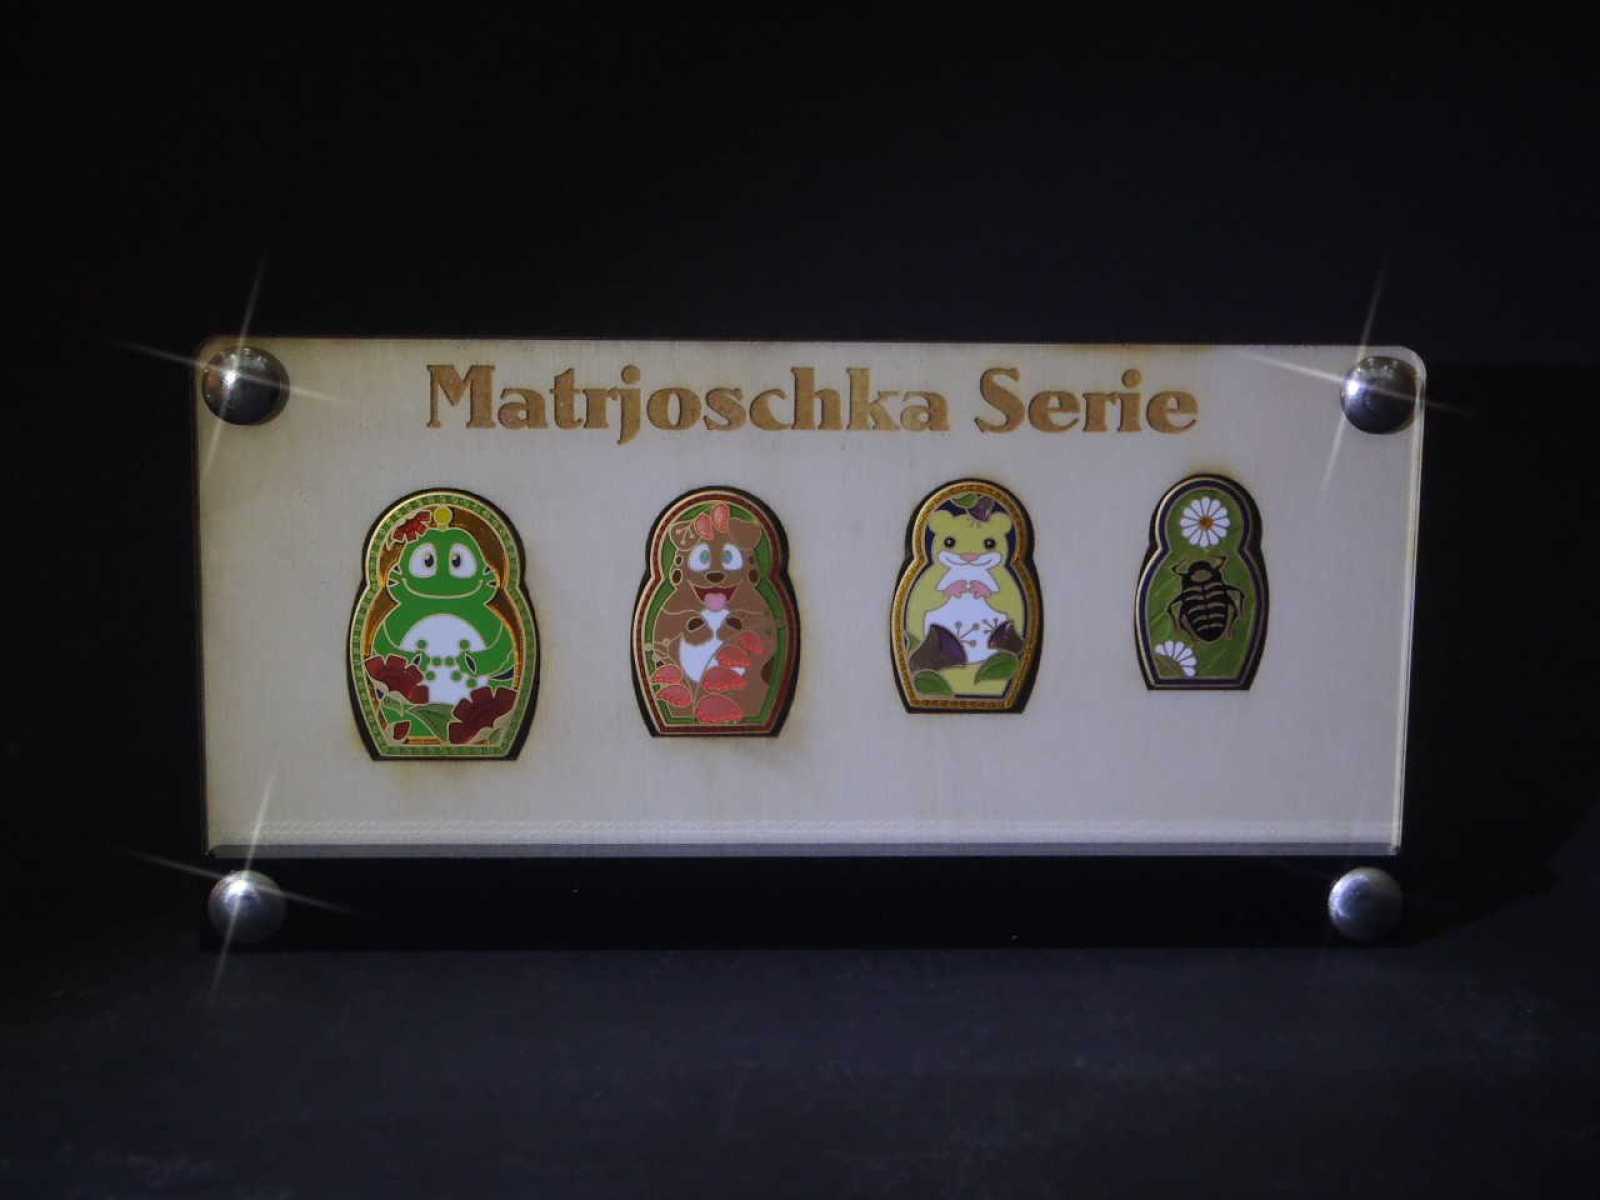 Special GeoCoinCollector - "Matroschka Serie"